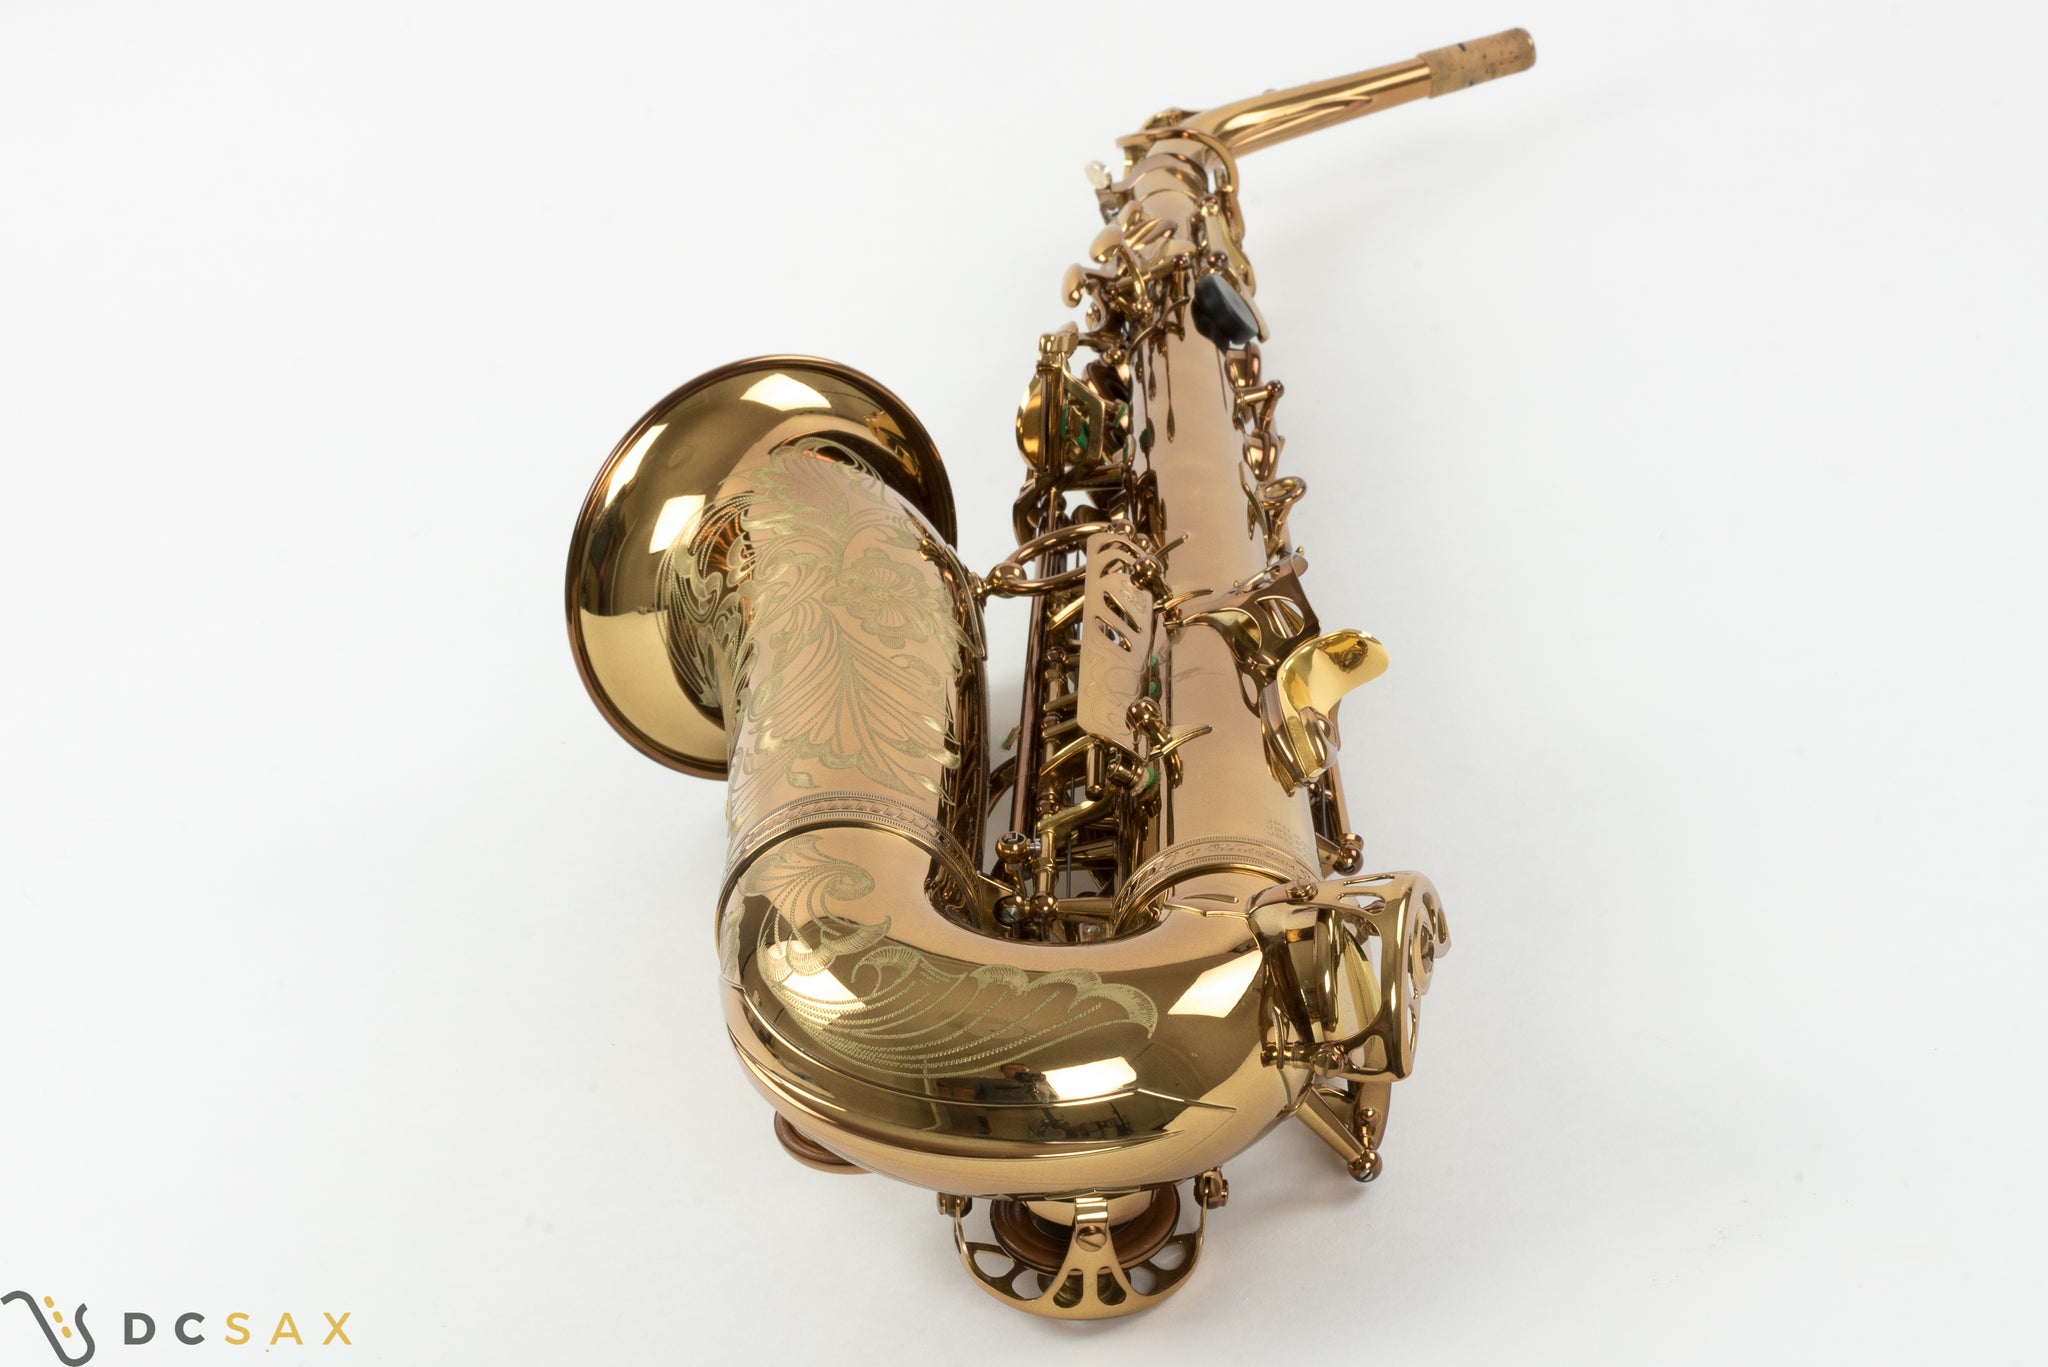 Ishimori Woodstone Alto Saxophone, Mint Condition, Video